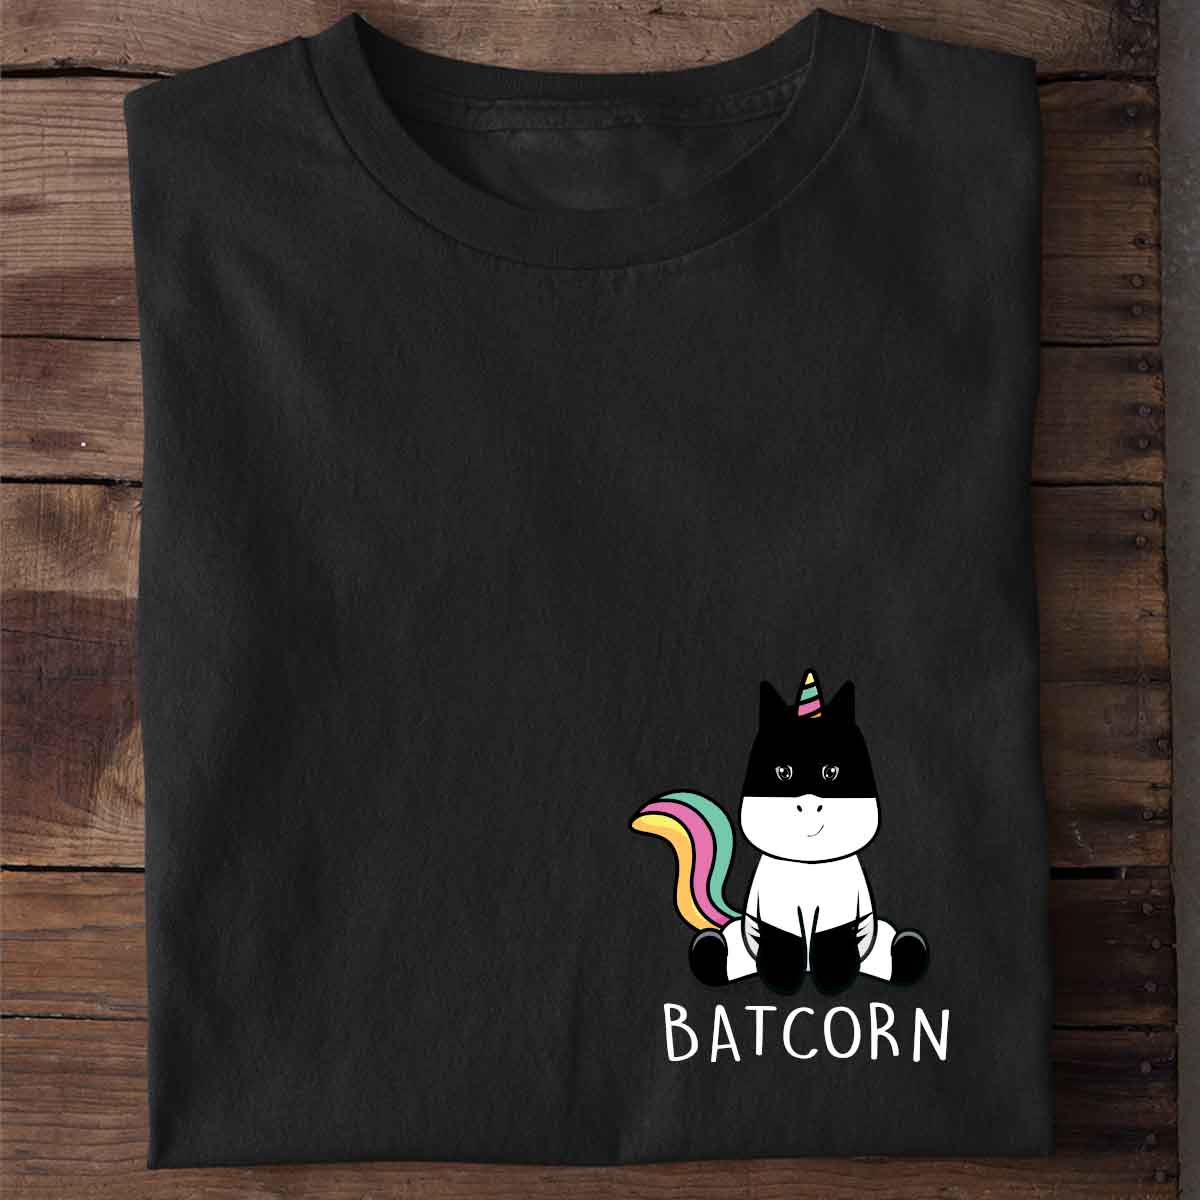 Batcorn - Shirt Unisex Chest